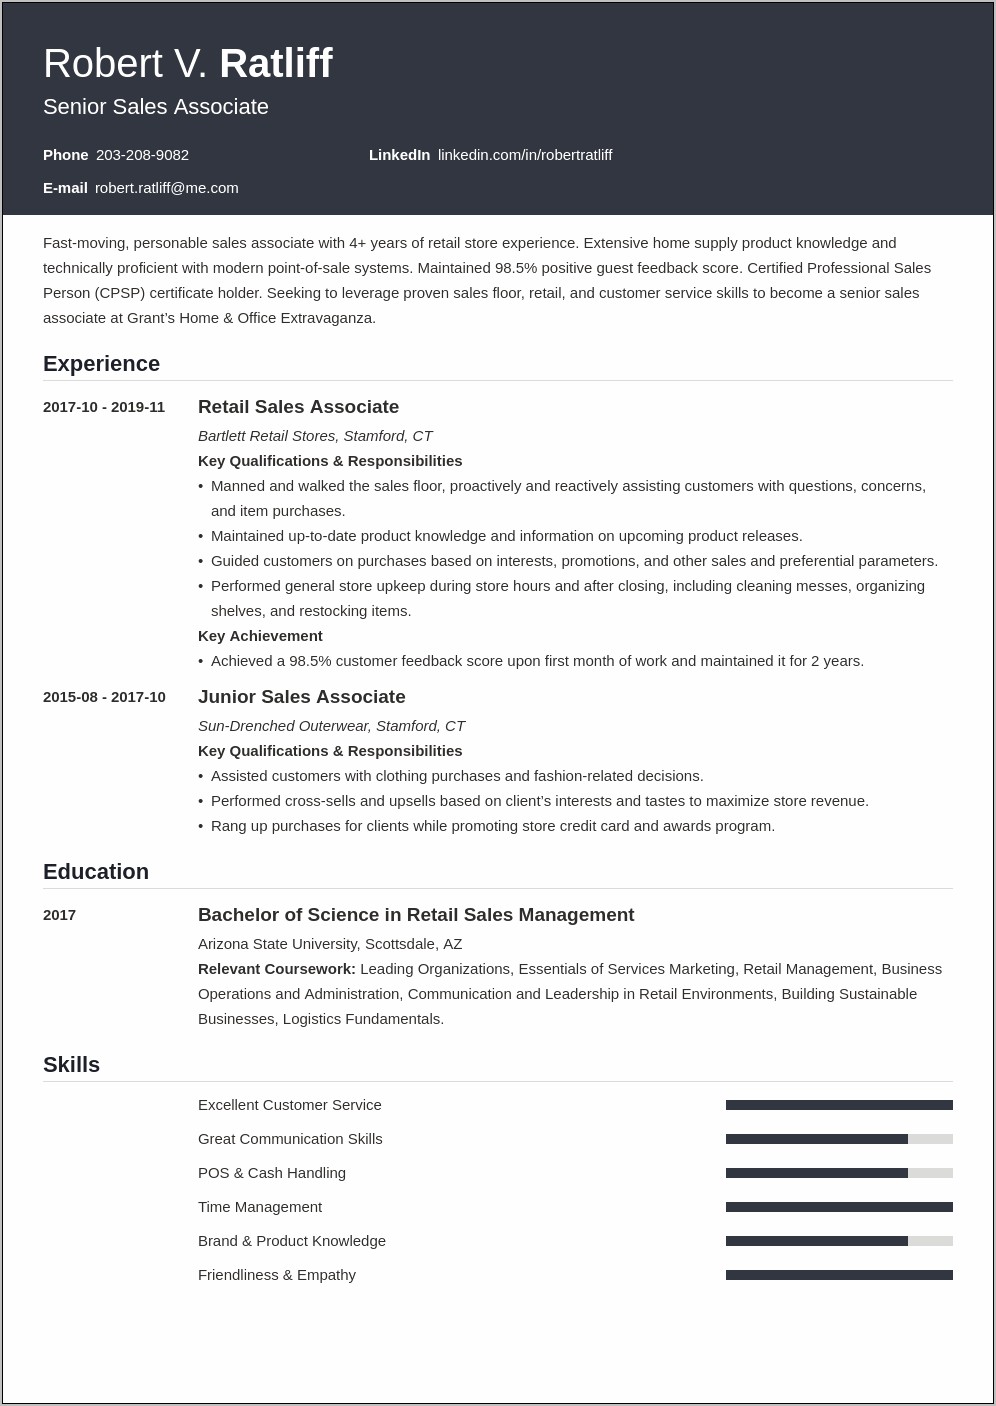 Sales Associate Job Description Resume Experience